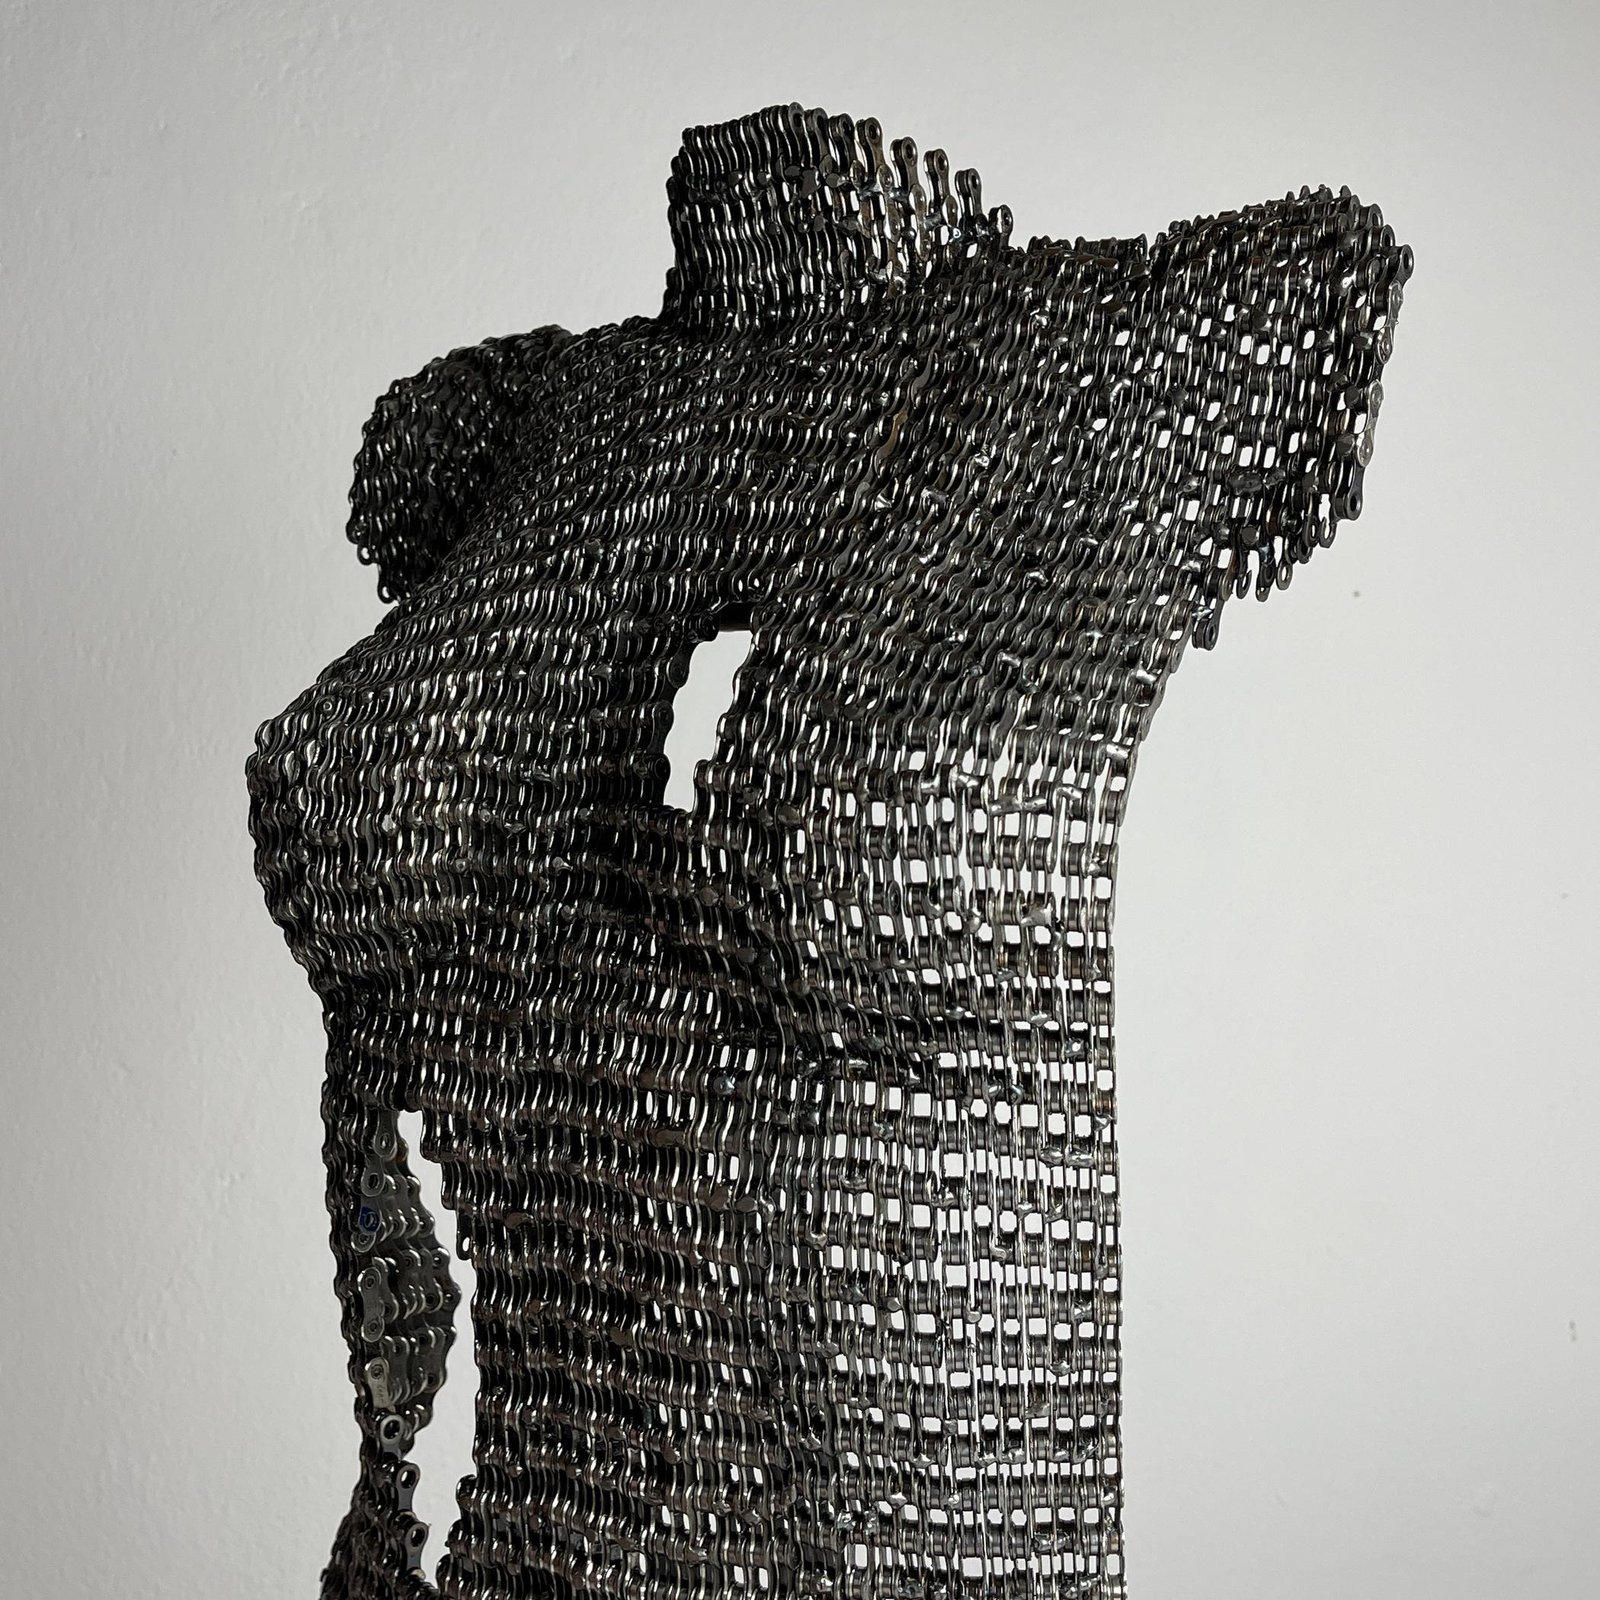 Elegance Forged in Metal: The One-of-a-Kind Sculpture by Jaka Globočnik